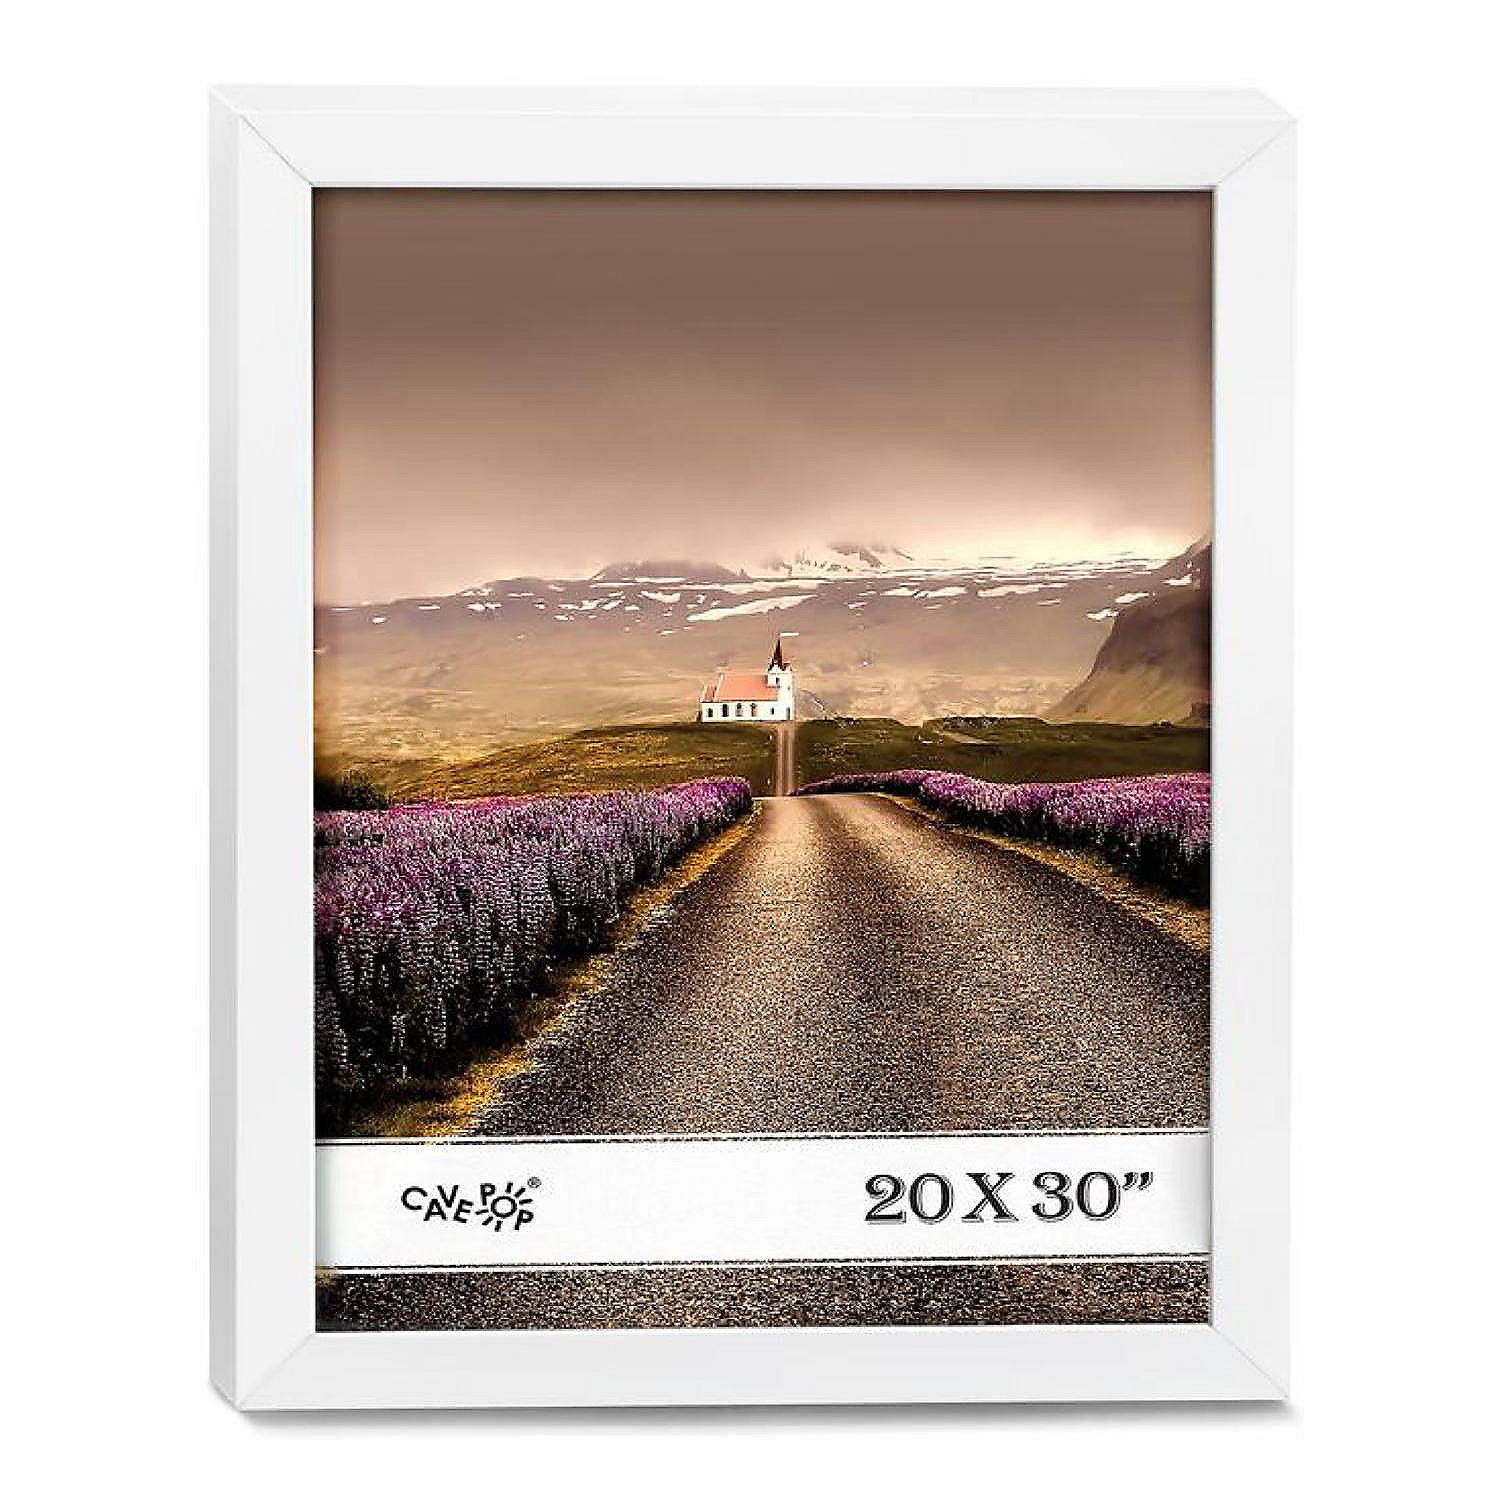 Grit Ontslag Hong Kong Cavepop 20x30 Single White Picture Frame | Oriental Trading